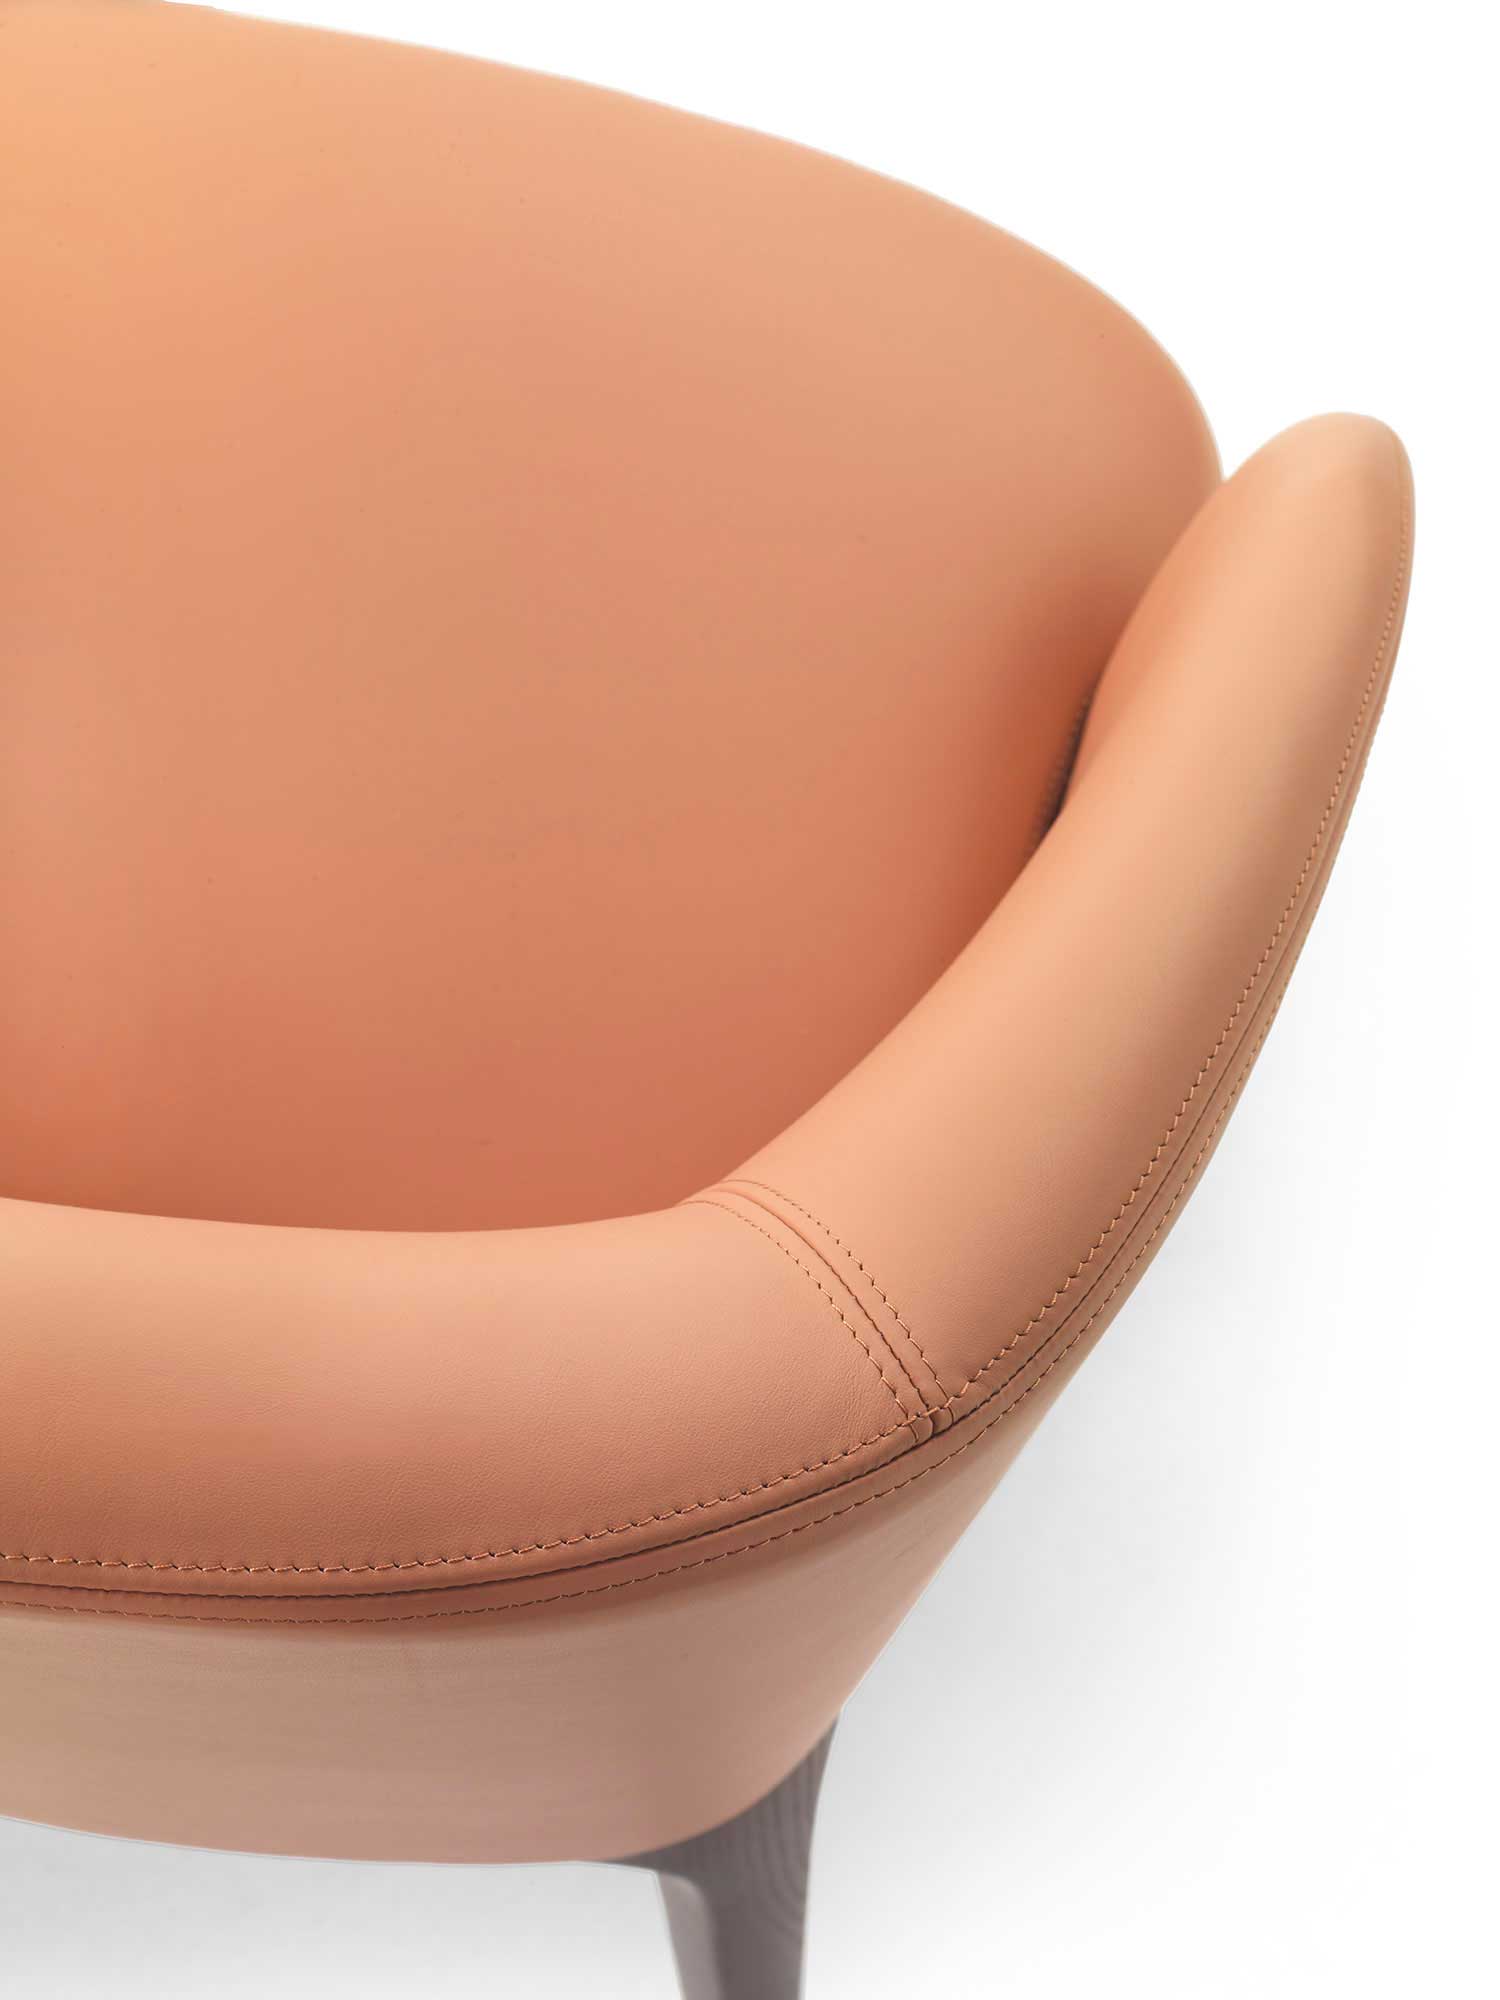 Img014 Paris Artificial Leather Chair Detail